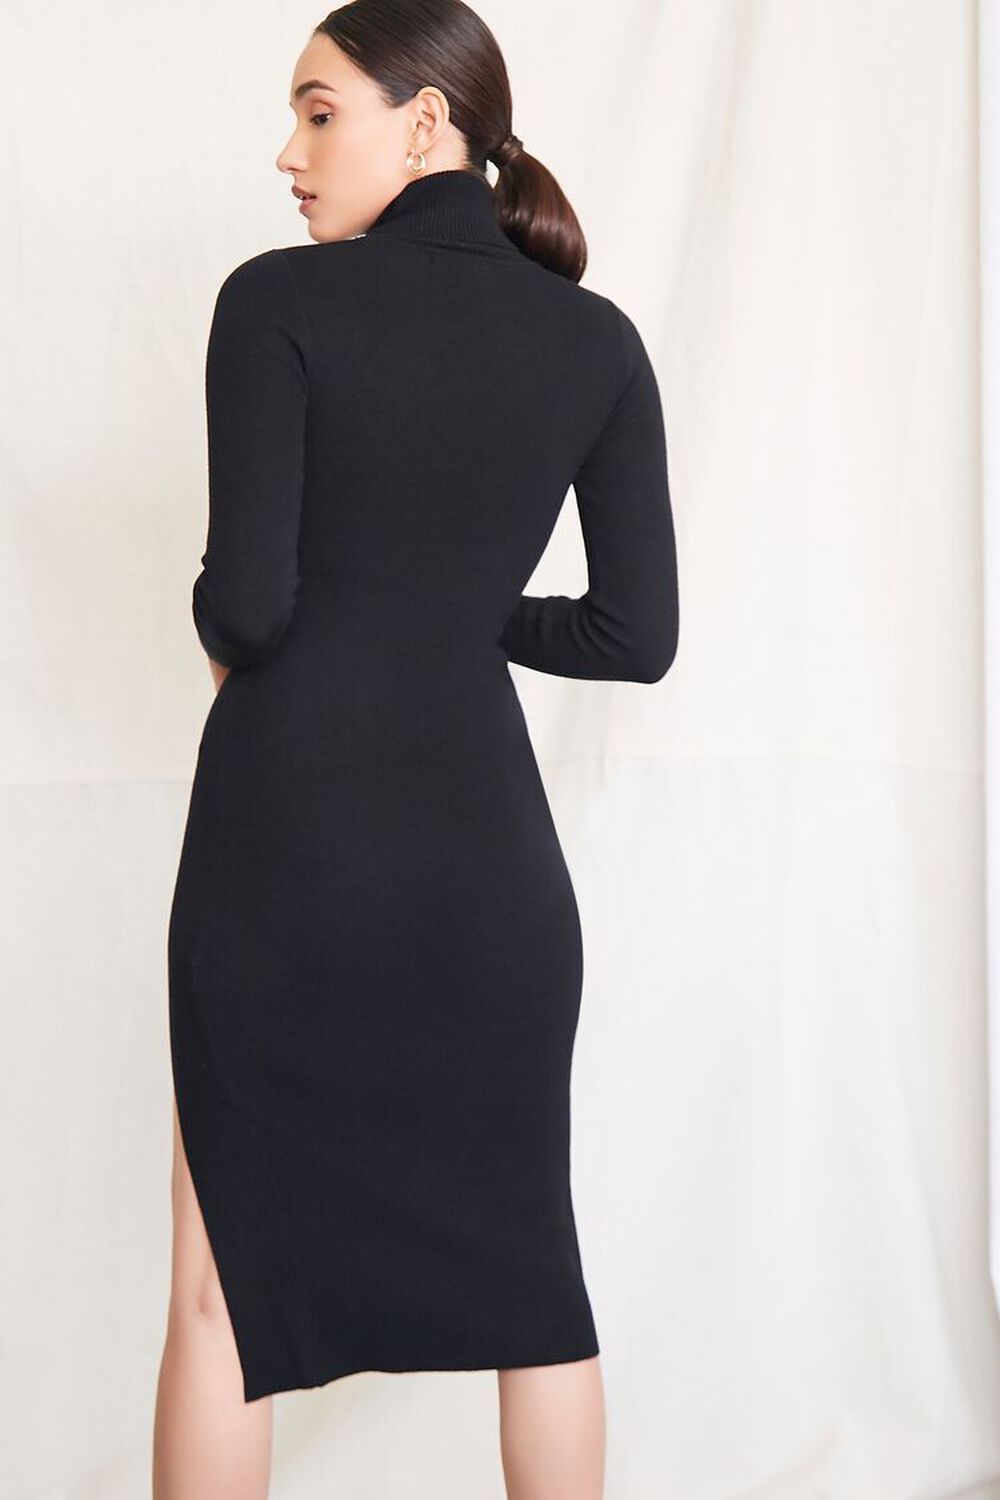 BLACK Cutout Turtleneck Sweater Dress, image 3